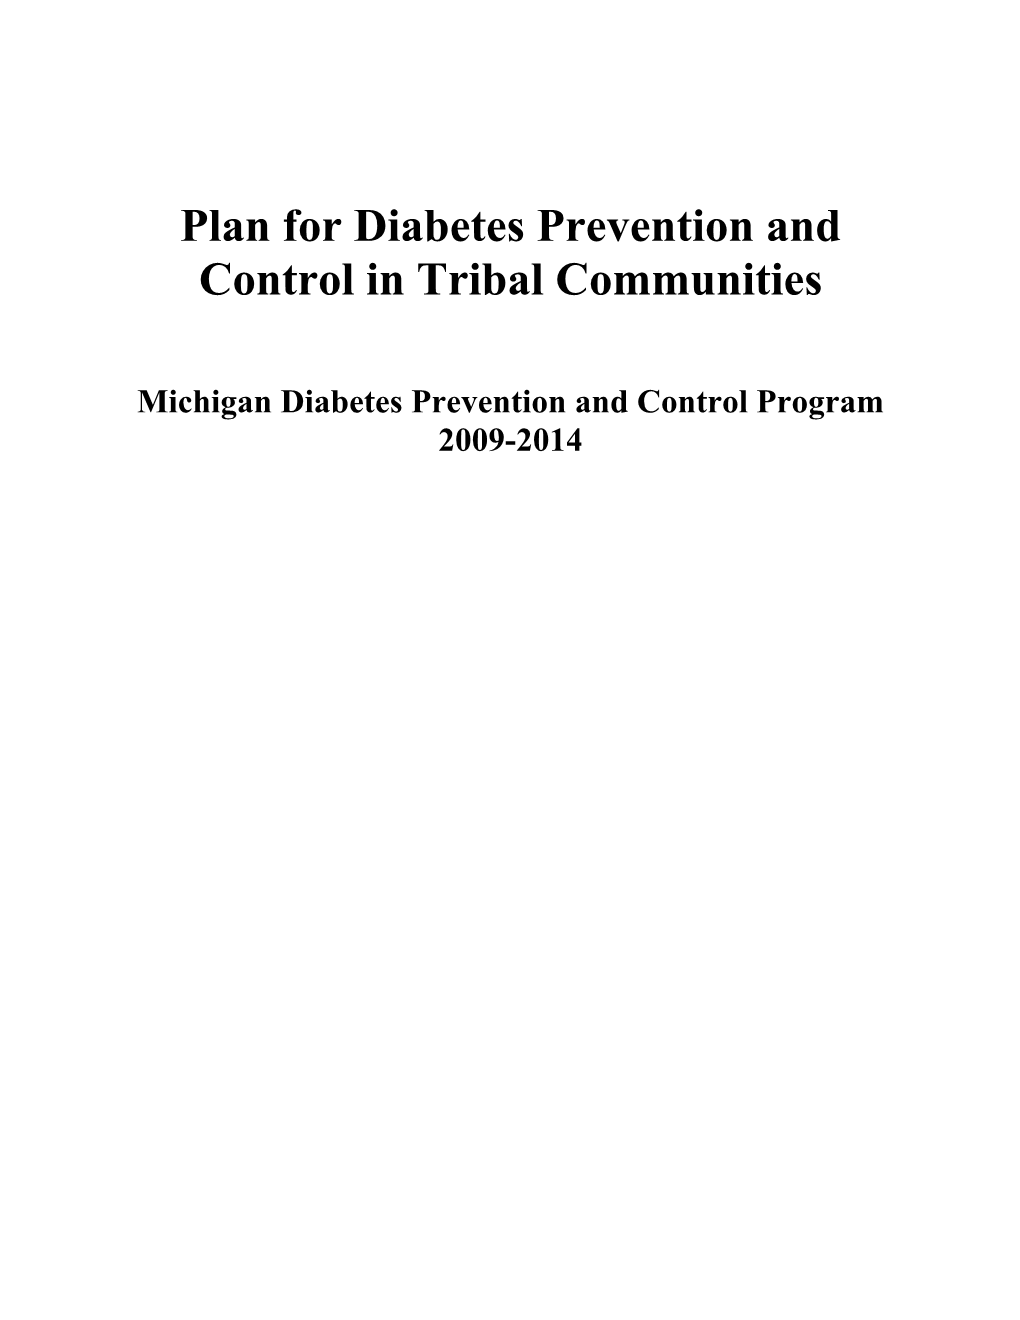 Michigan Diabetes Prevention and Control Program 2009-2014